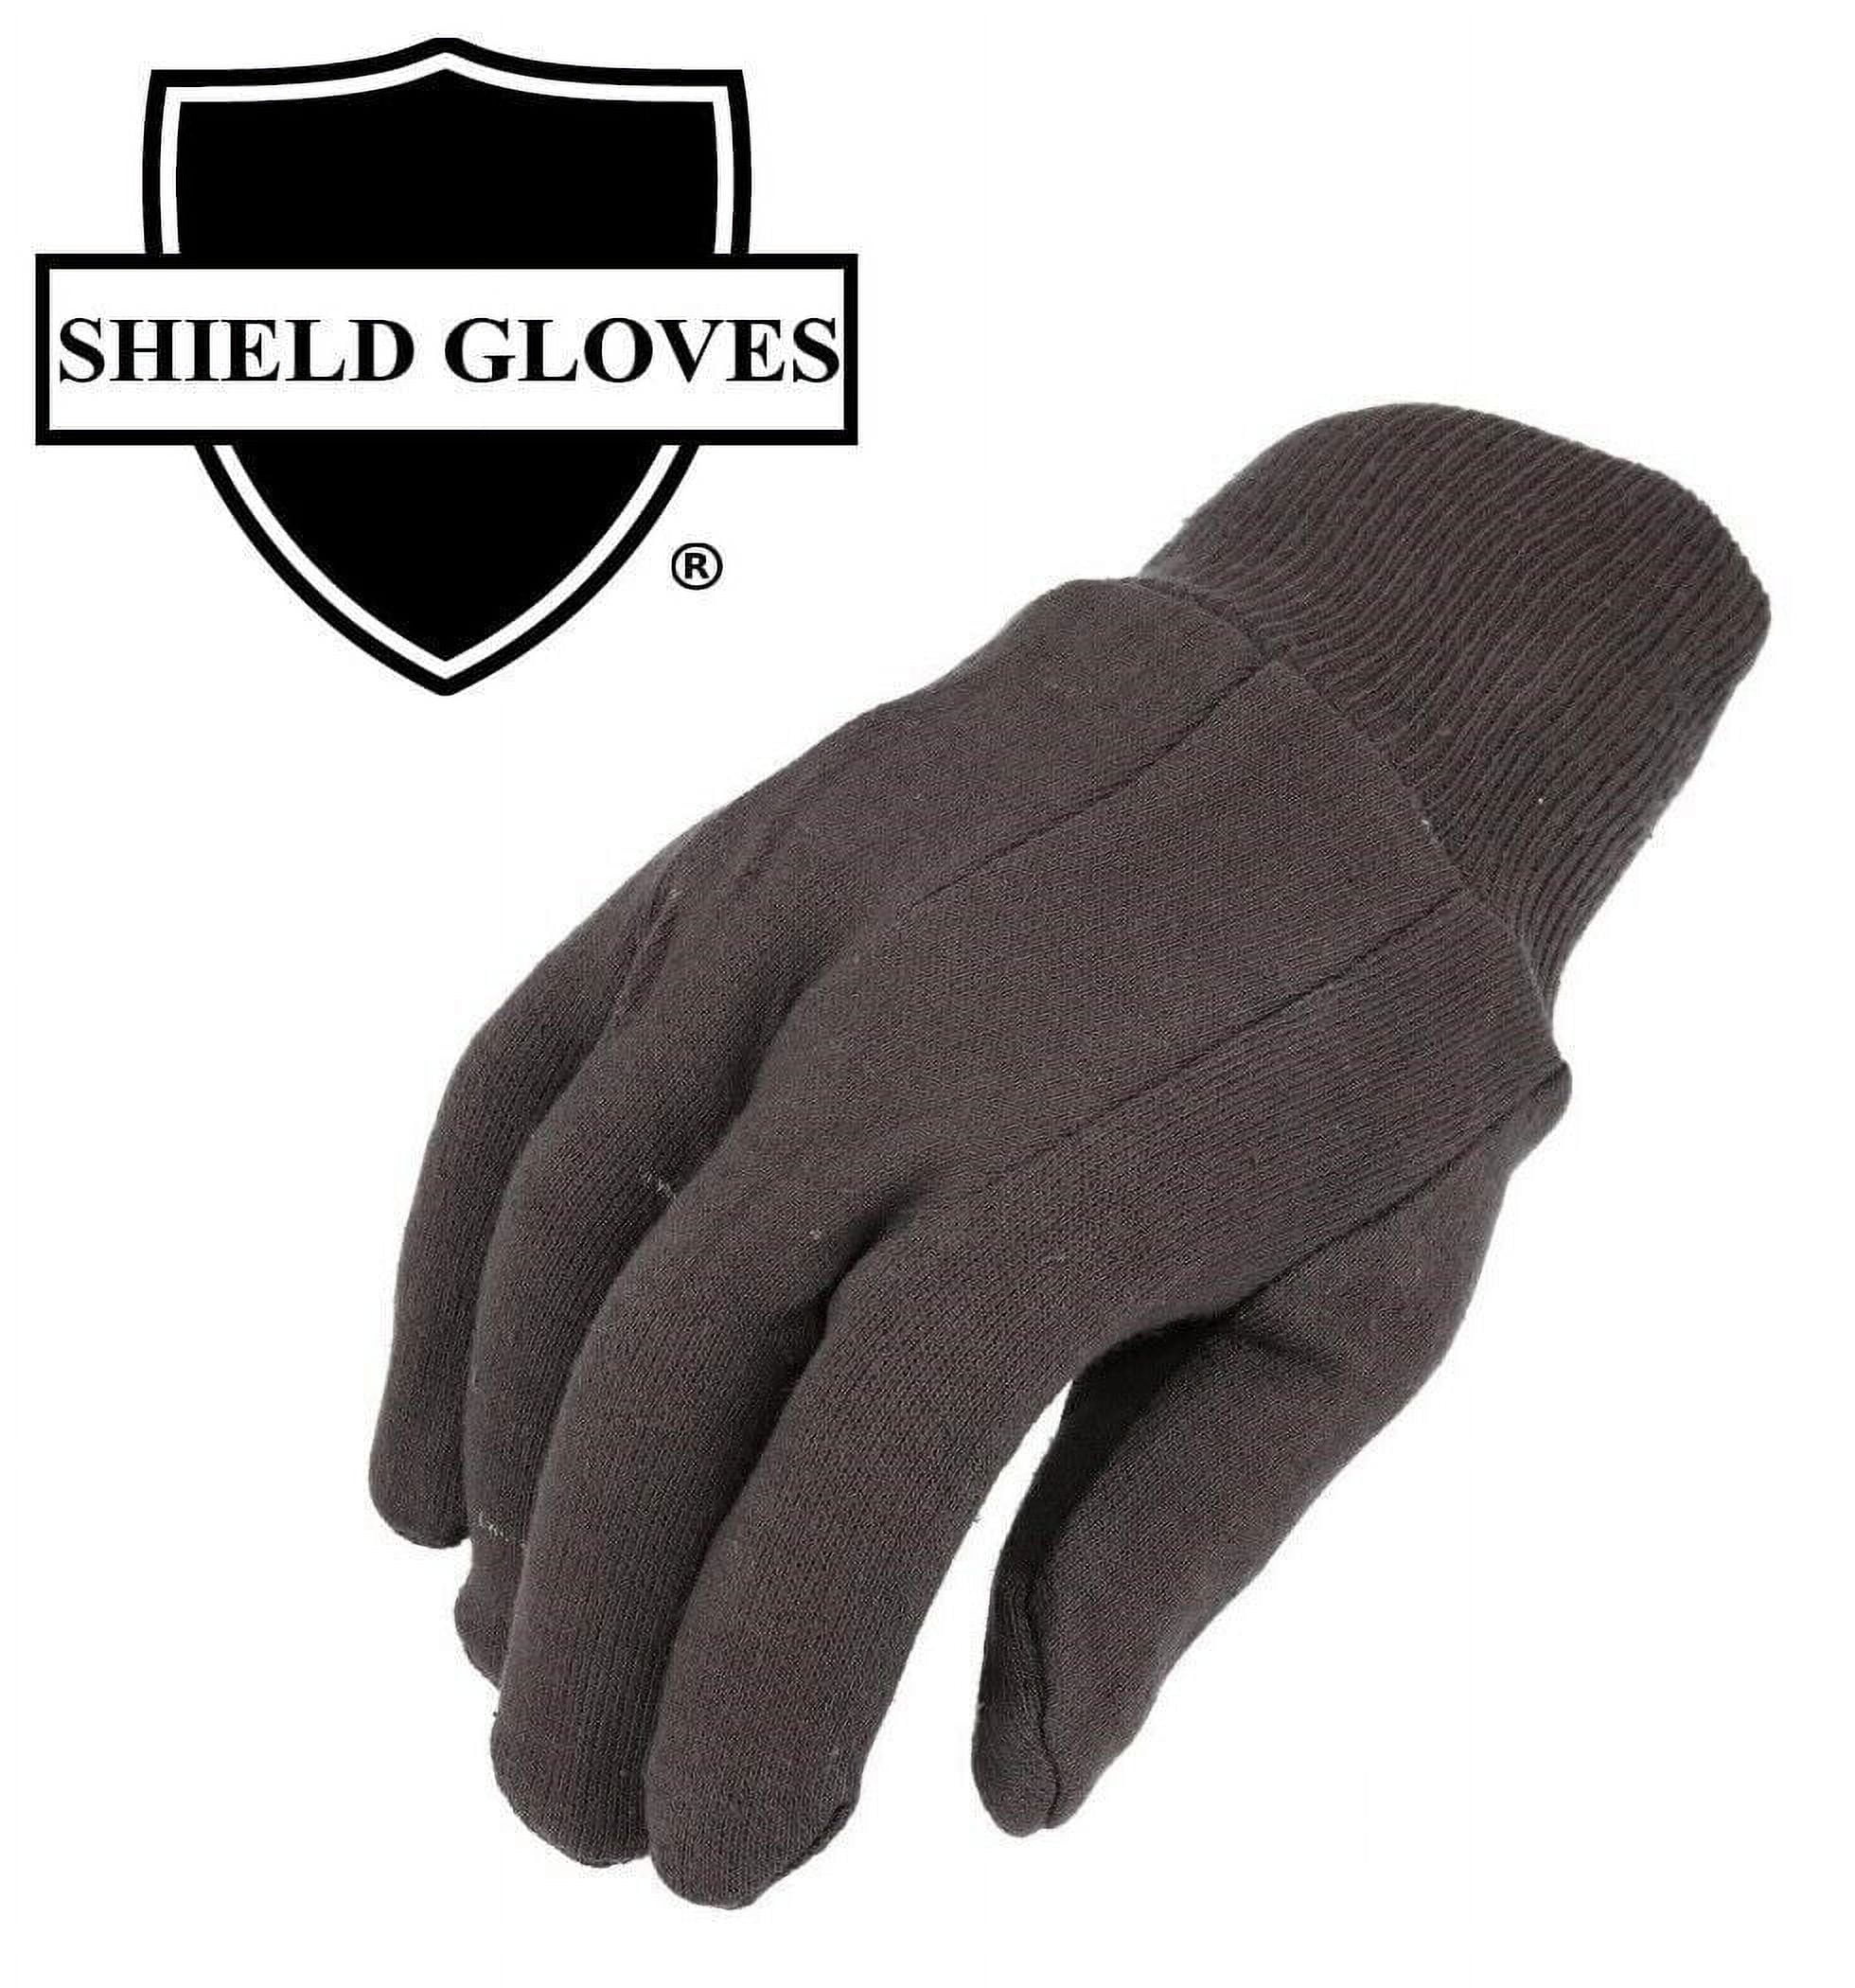 Dropship Natural Color Jersey Gloves For Men Bulk; Pack Of 24 Cotton Jersey Work  Gloves; Mens Cotton Work Gloves Of Natural Color to Sell Online at a Lower  Price